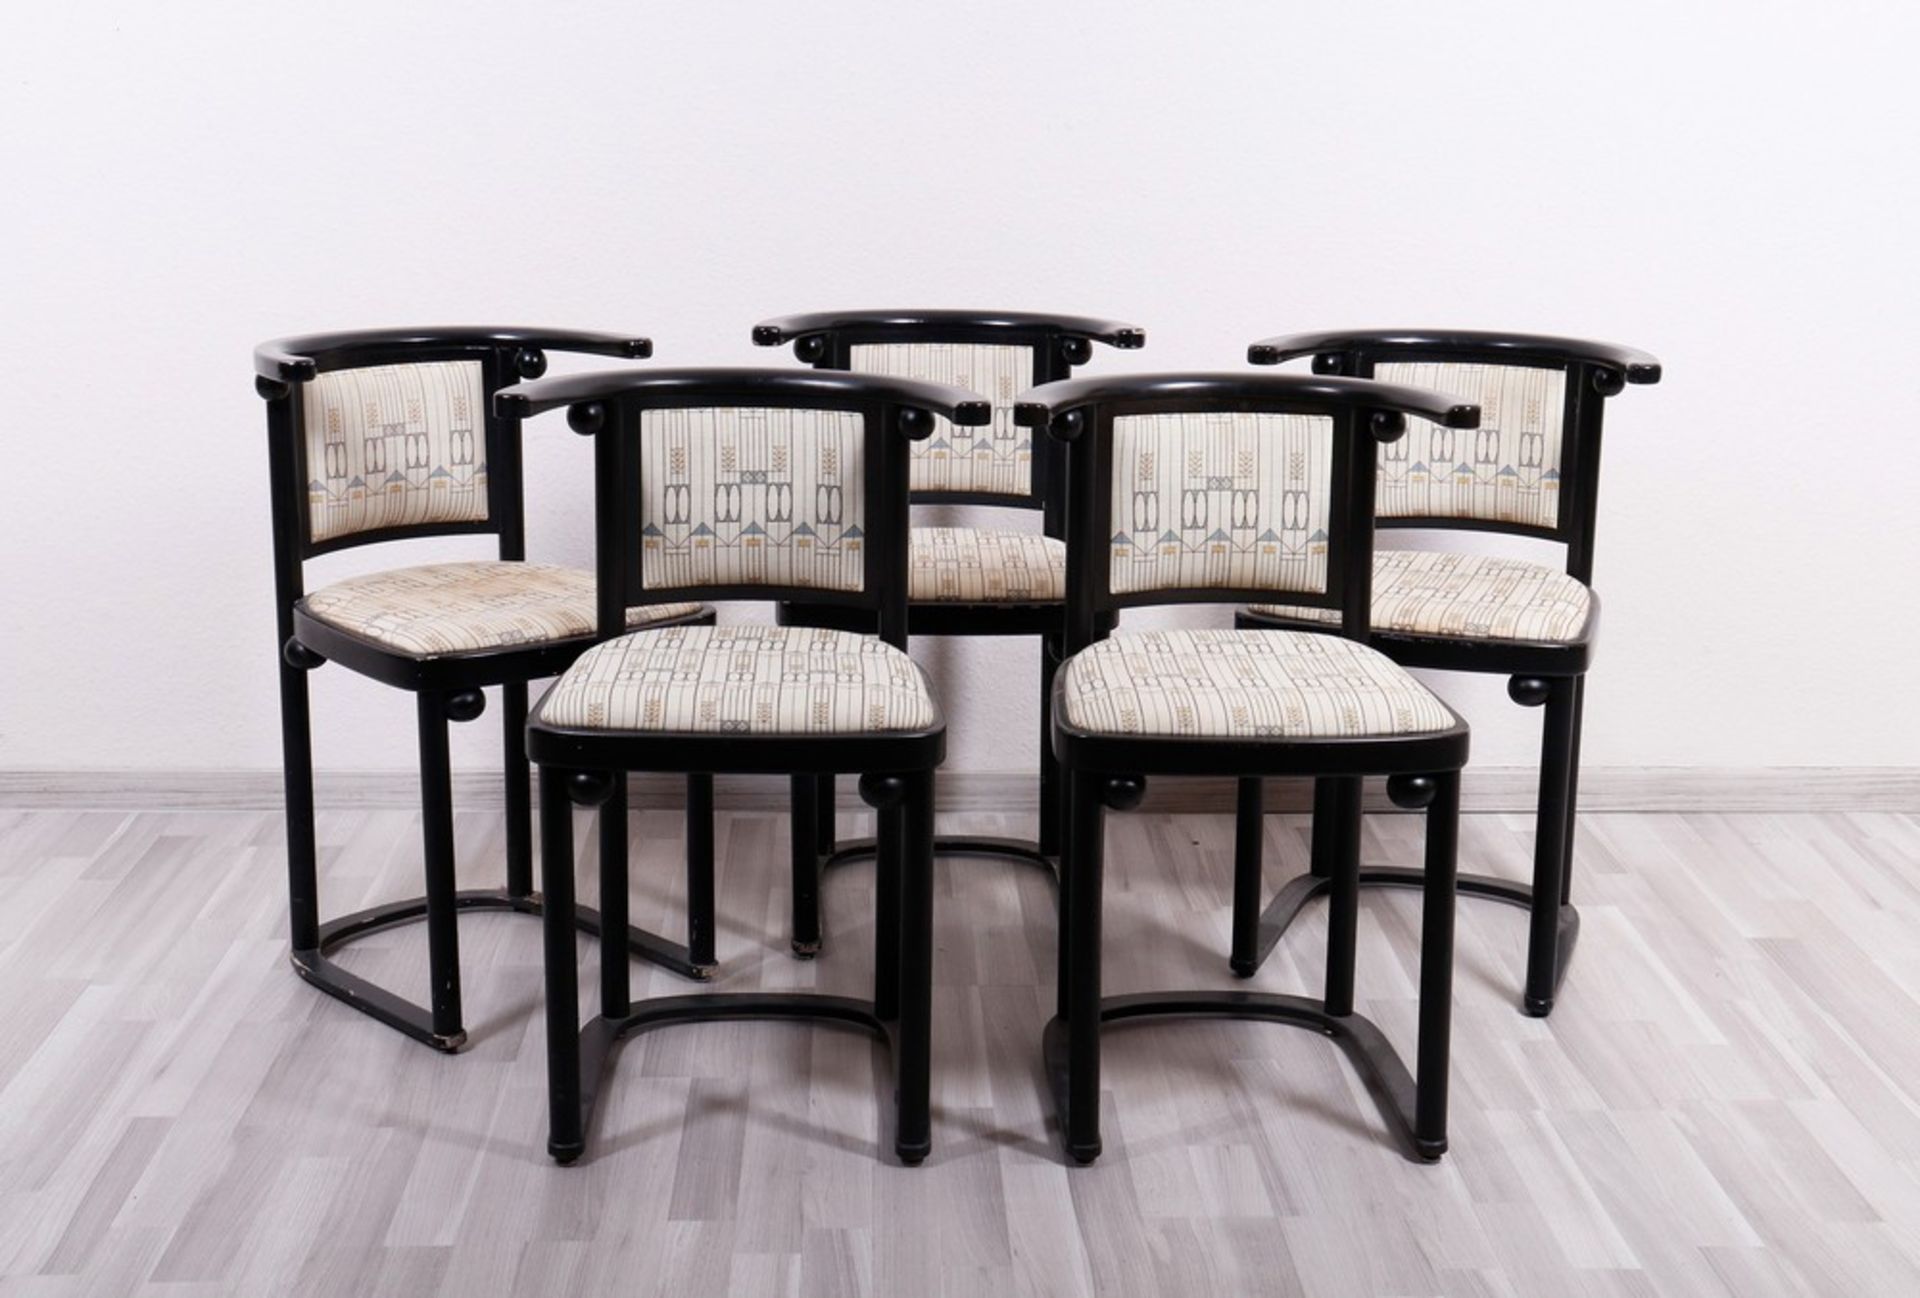 5 "Fledermaus" chairs, designed by Josef Hoffmann (1870, Pirnitz, Moravia - 1956 in Vienna), manufa